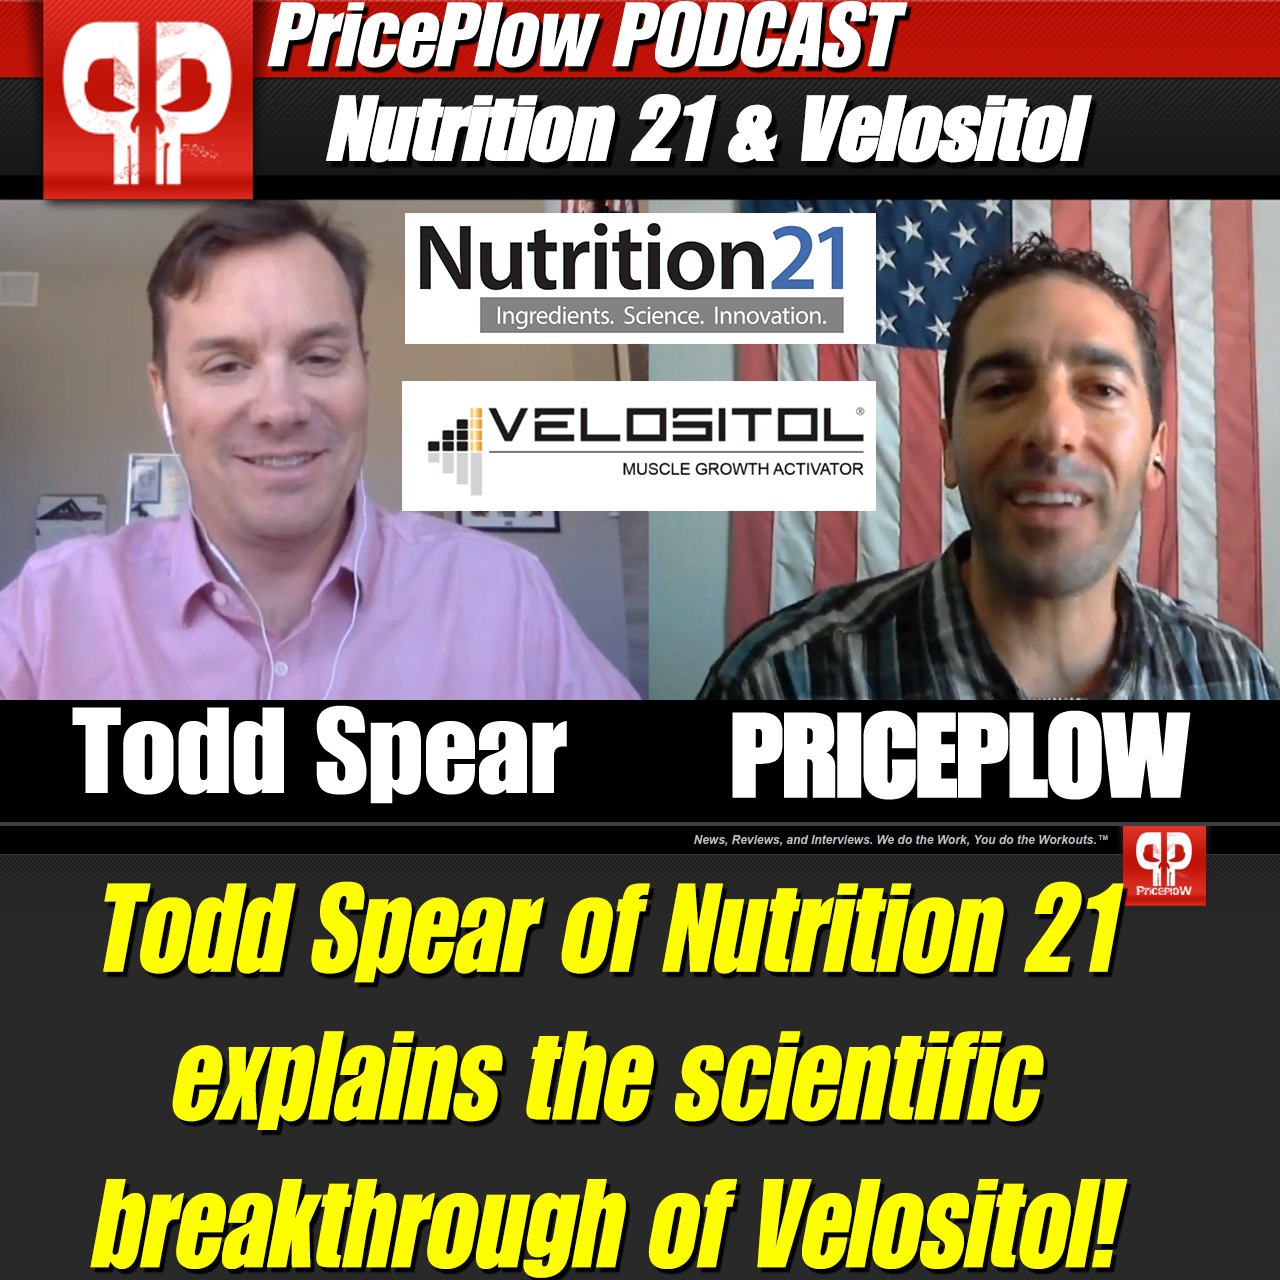 Velositol Todd Spear Nutrition21